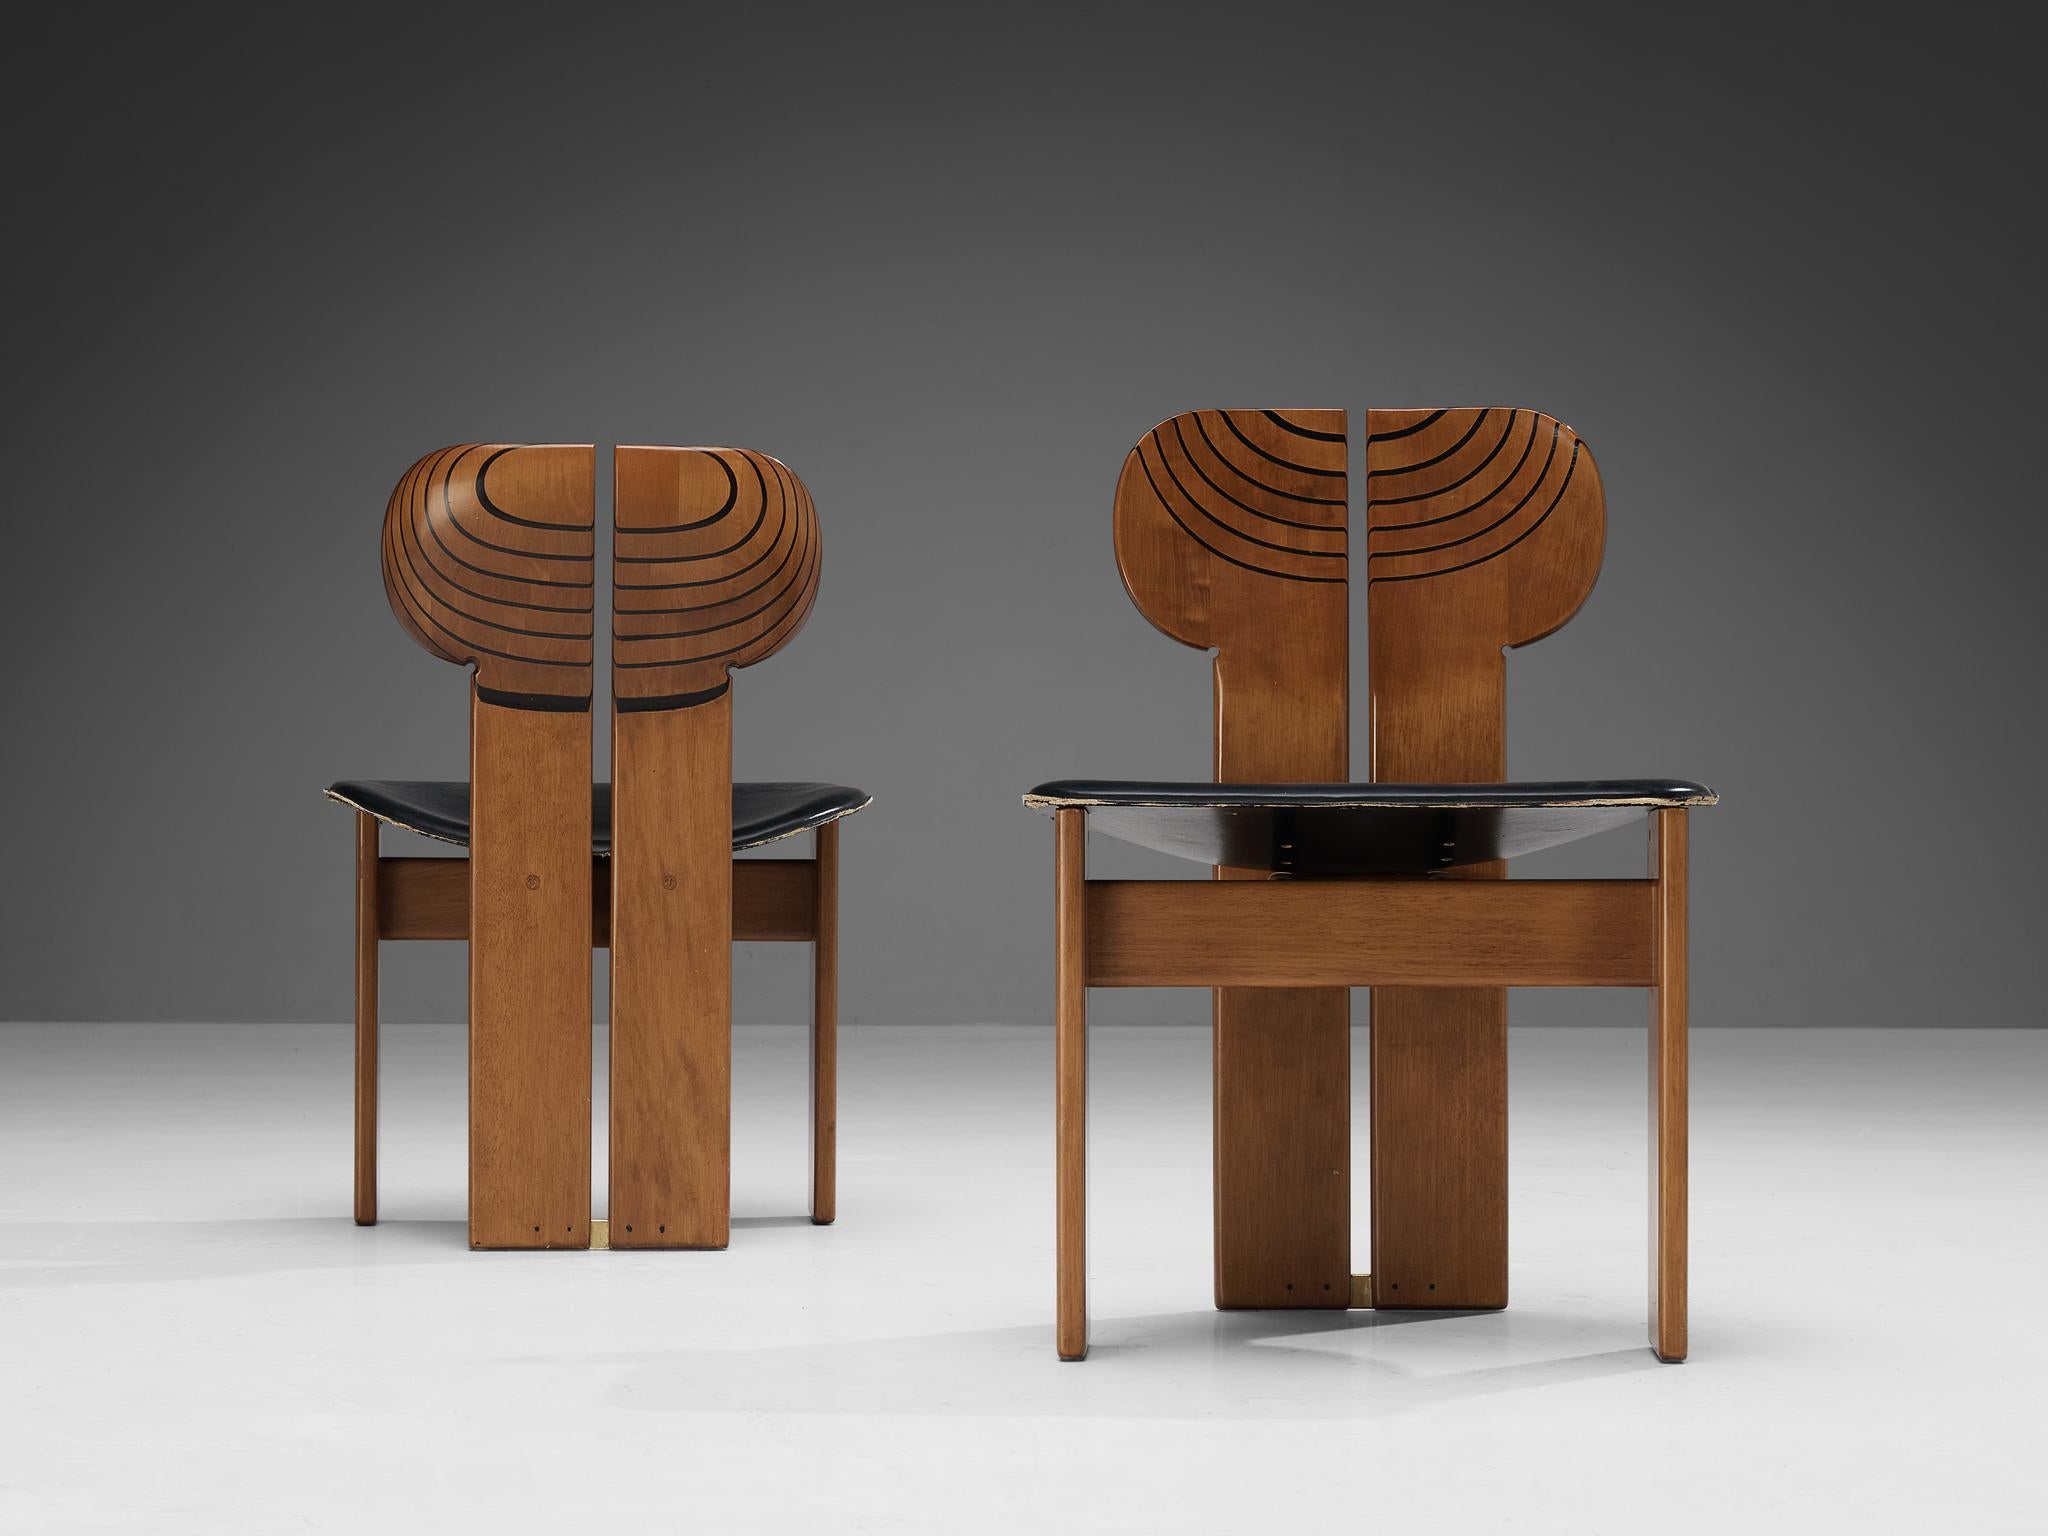 Afra & Tobia Scarpa for Maxalto, pair of dining chairs, model 'Africa', leather, walnut, ebony, brass, Italy, 1975

Sculptural pair of 'Africa' dining chairs designed by Afra & Tobia Scarpa. This model is part of the Artona collection by Italian